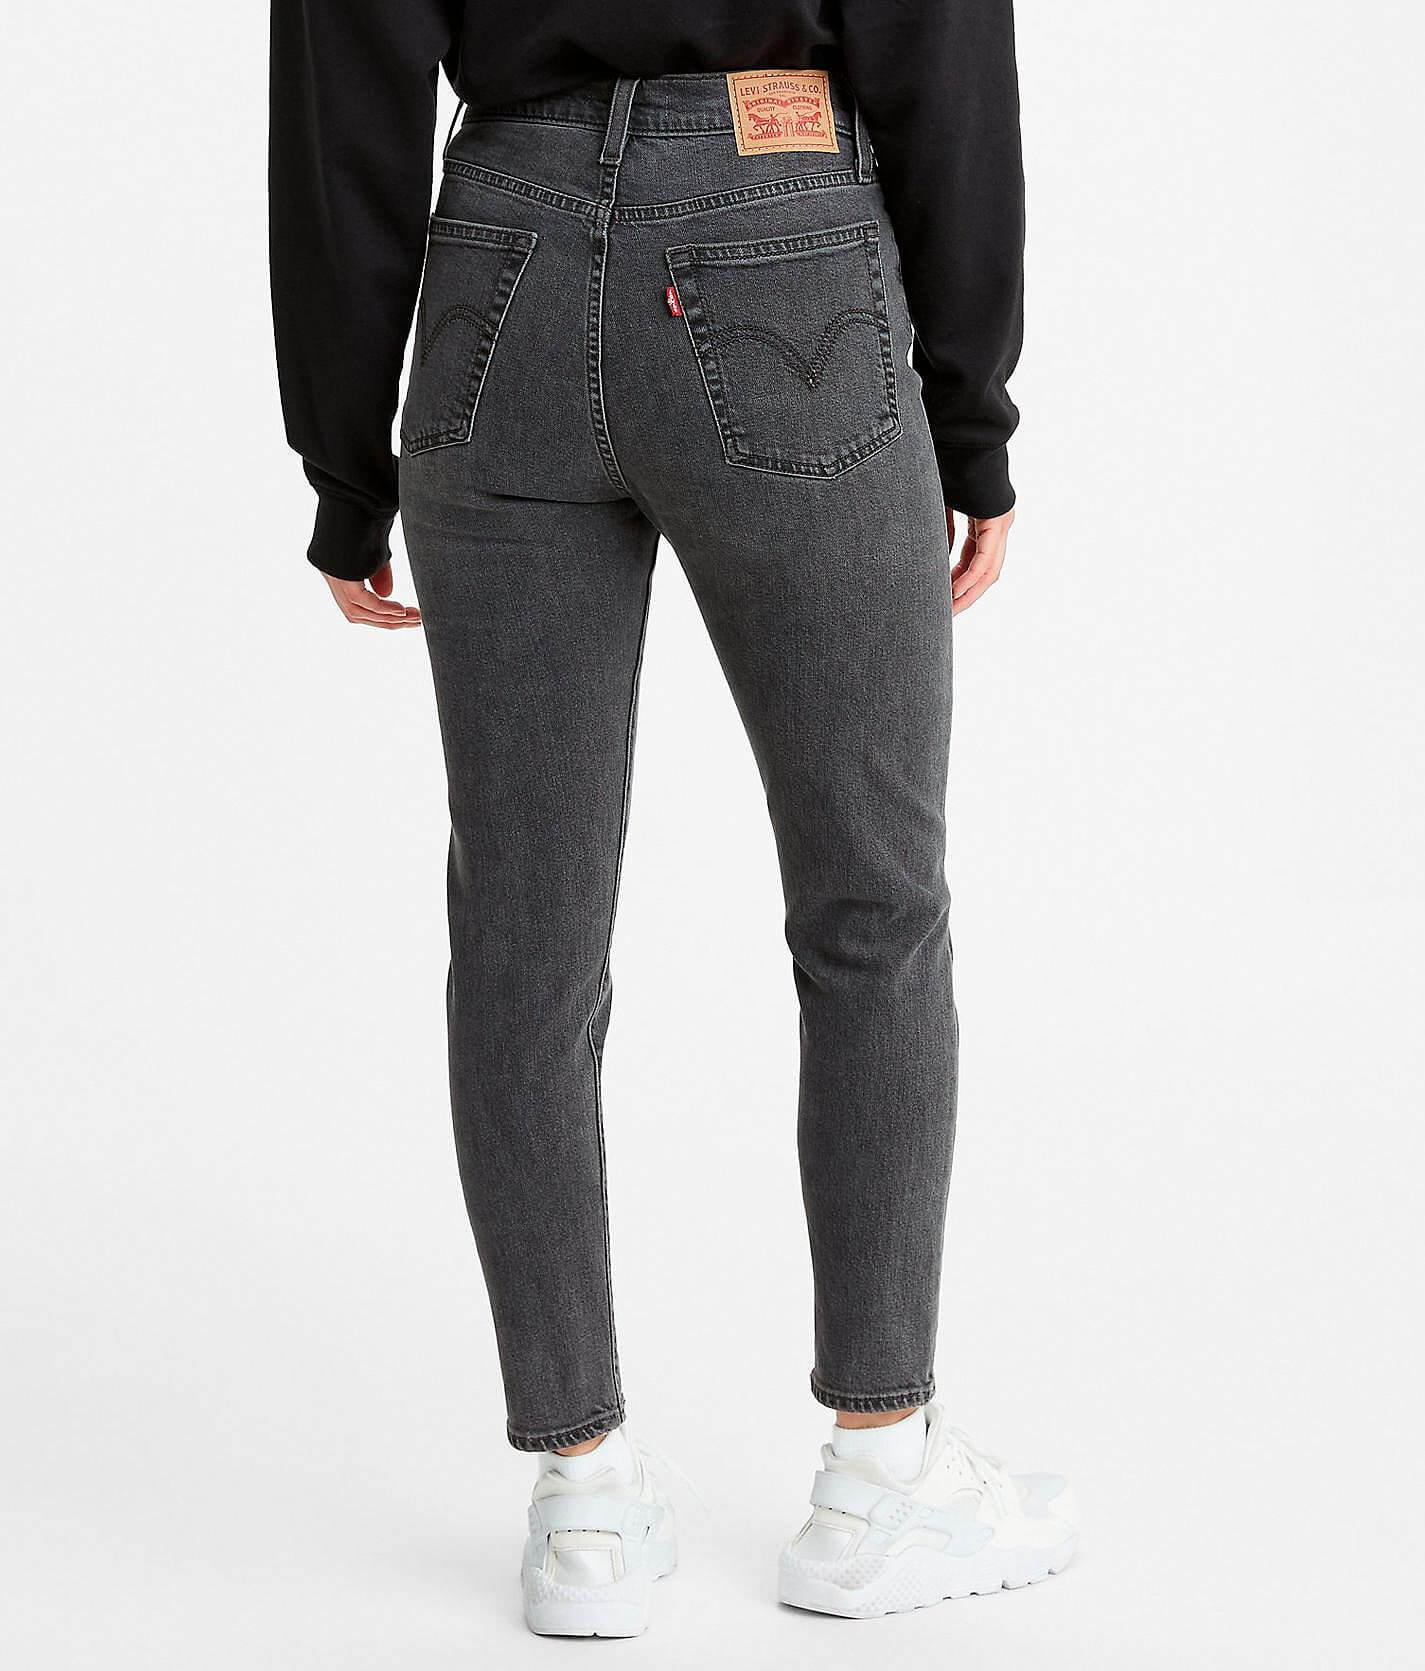 Levi's® Wedgie Skinny Stretch Jean - Women's Jeans in Jet Pack | Buckle